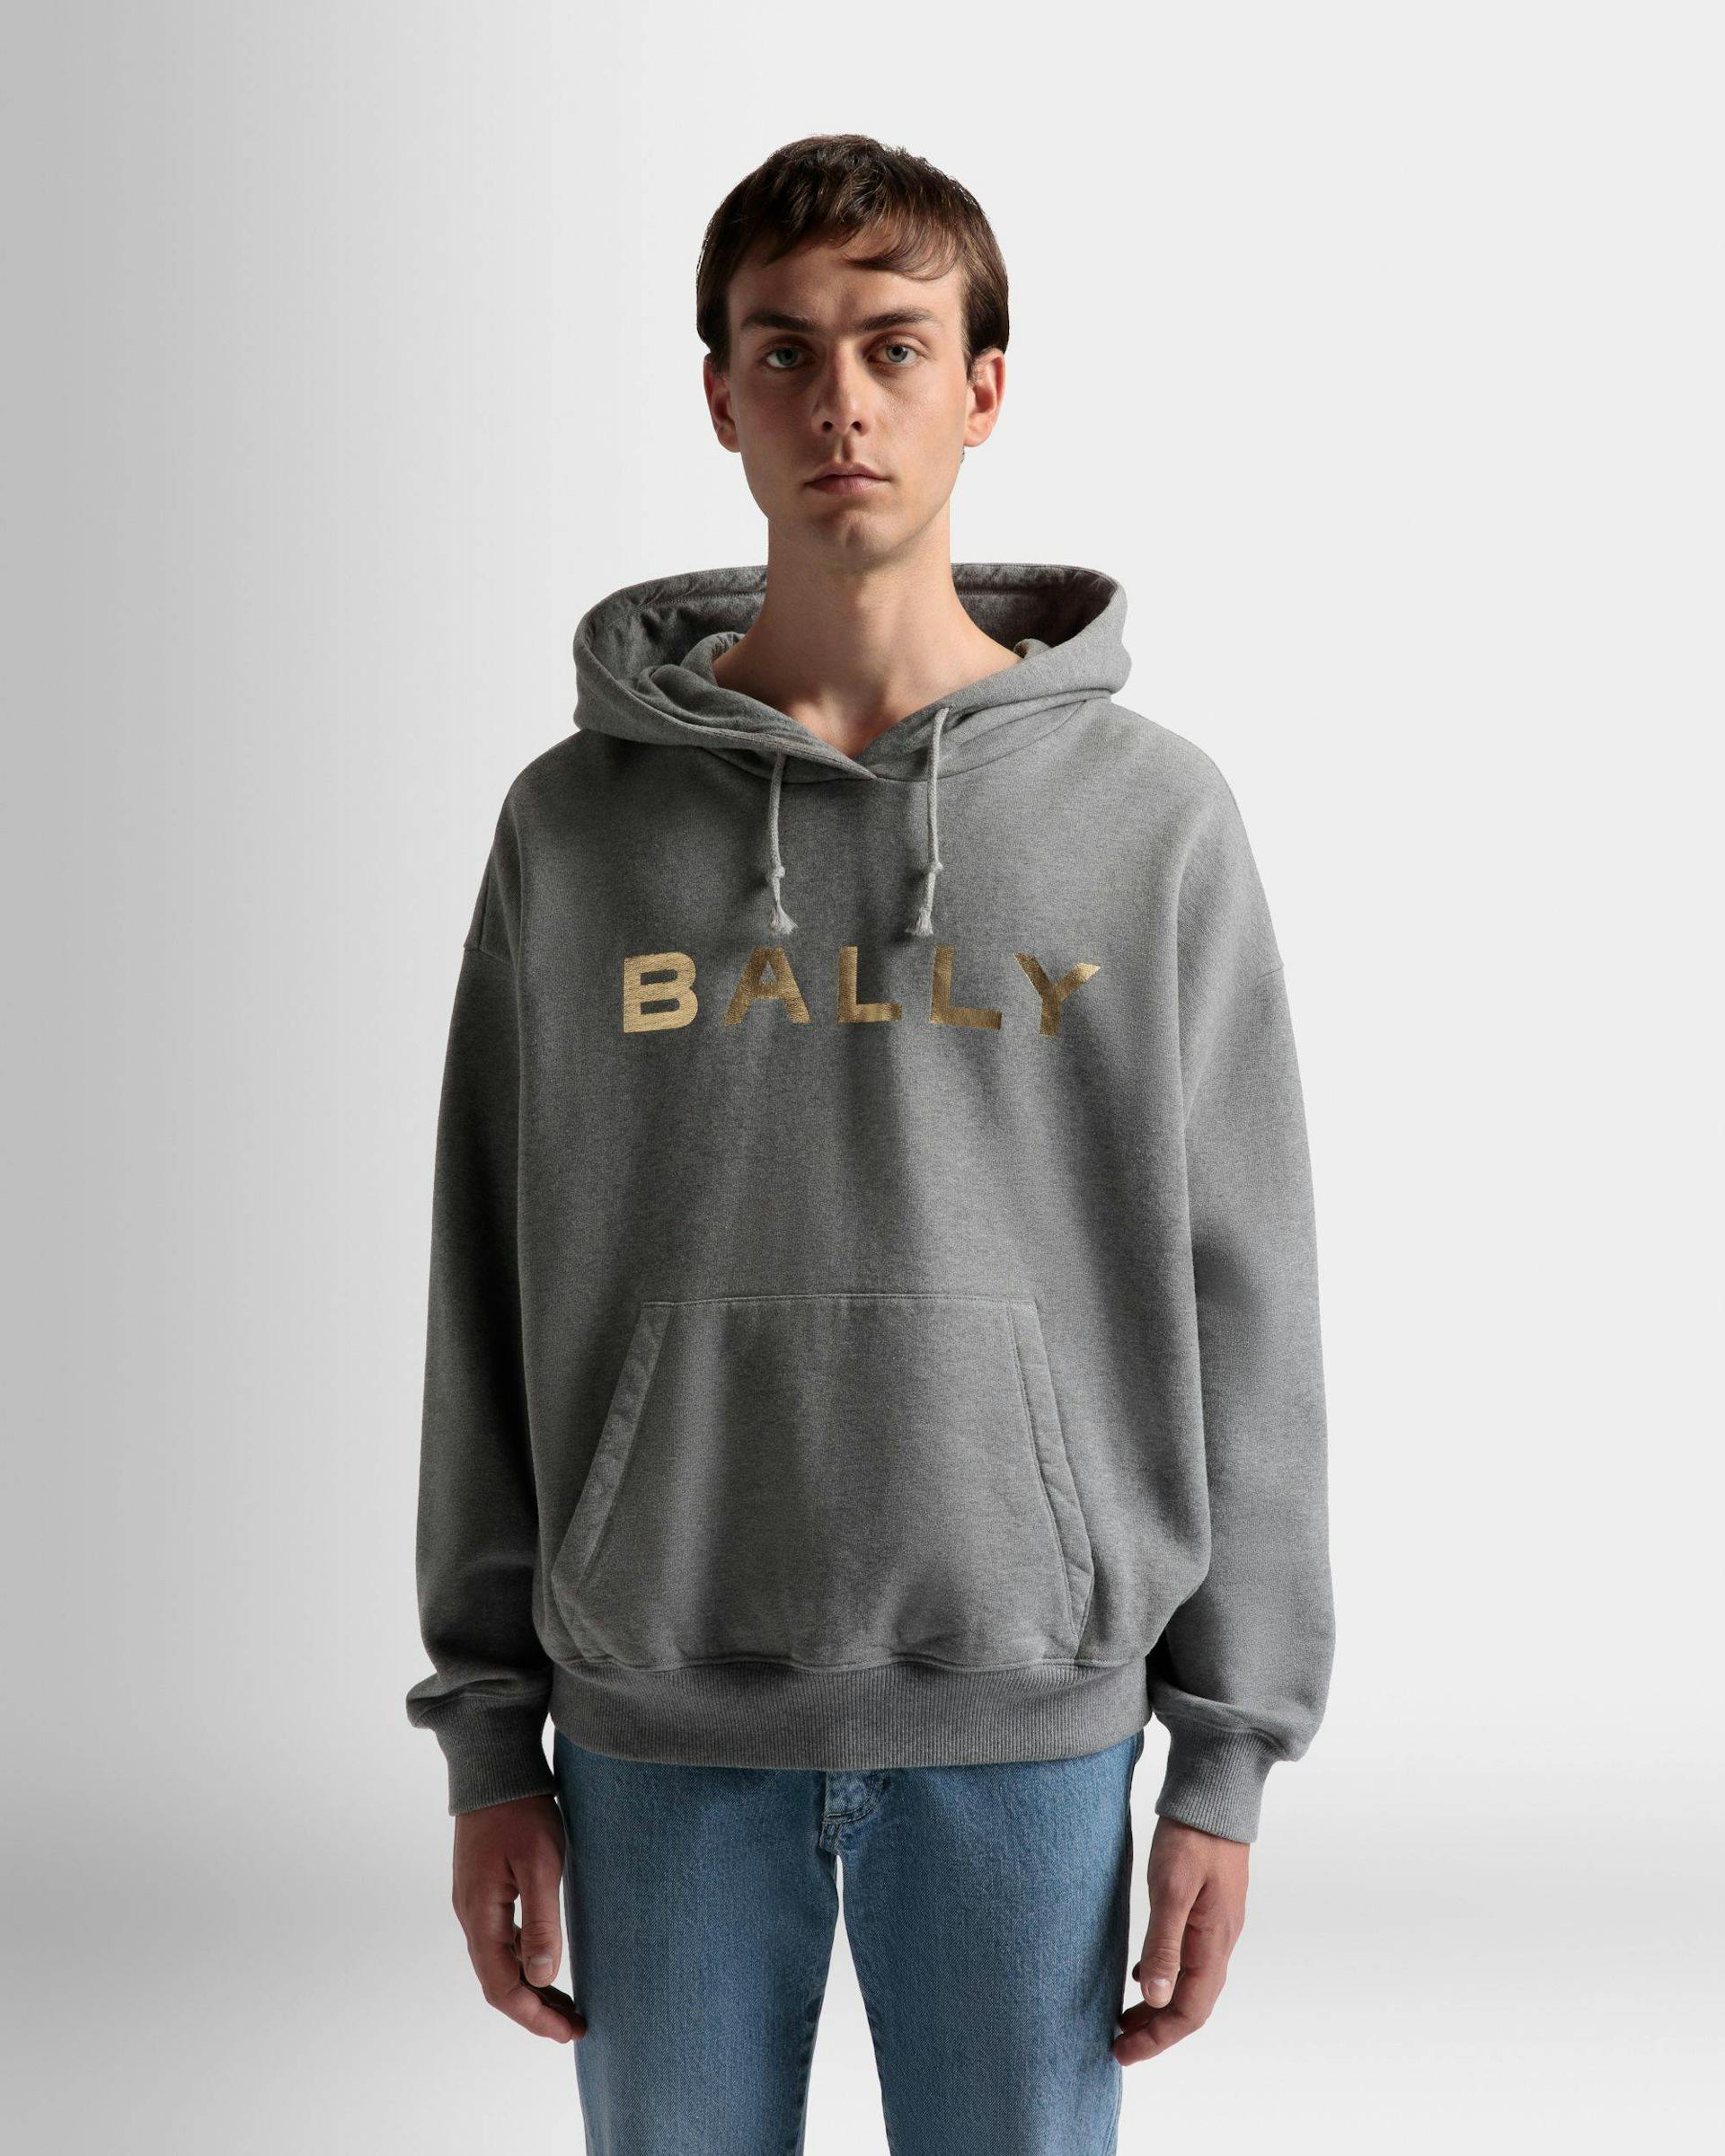 Men's Logo Hooded Sweatshirt In Grey Melange Cotton | Bally | On Model Close Up